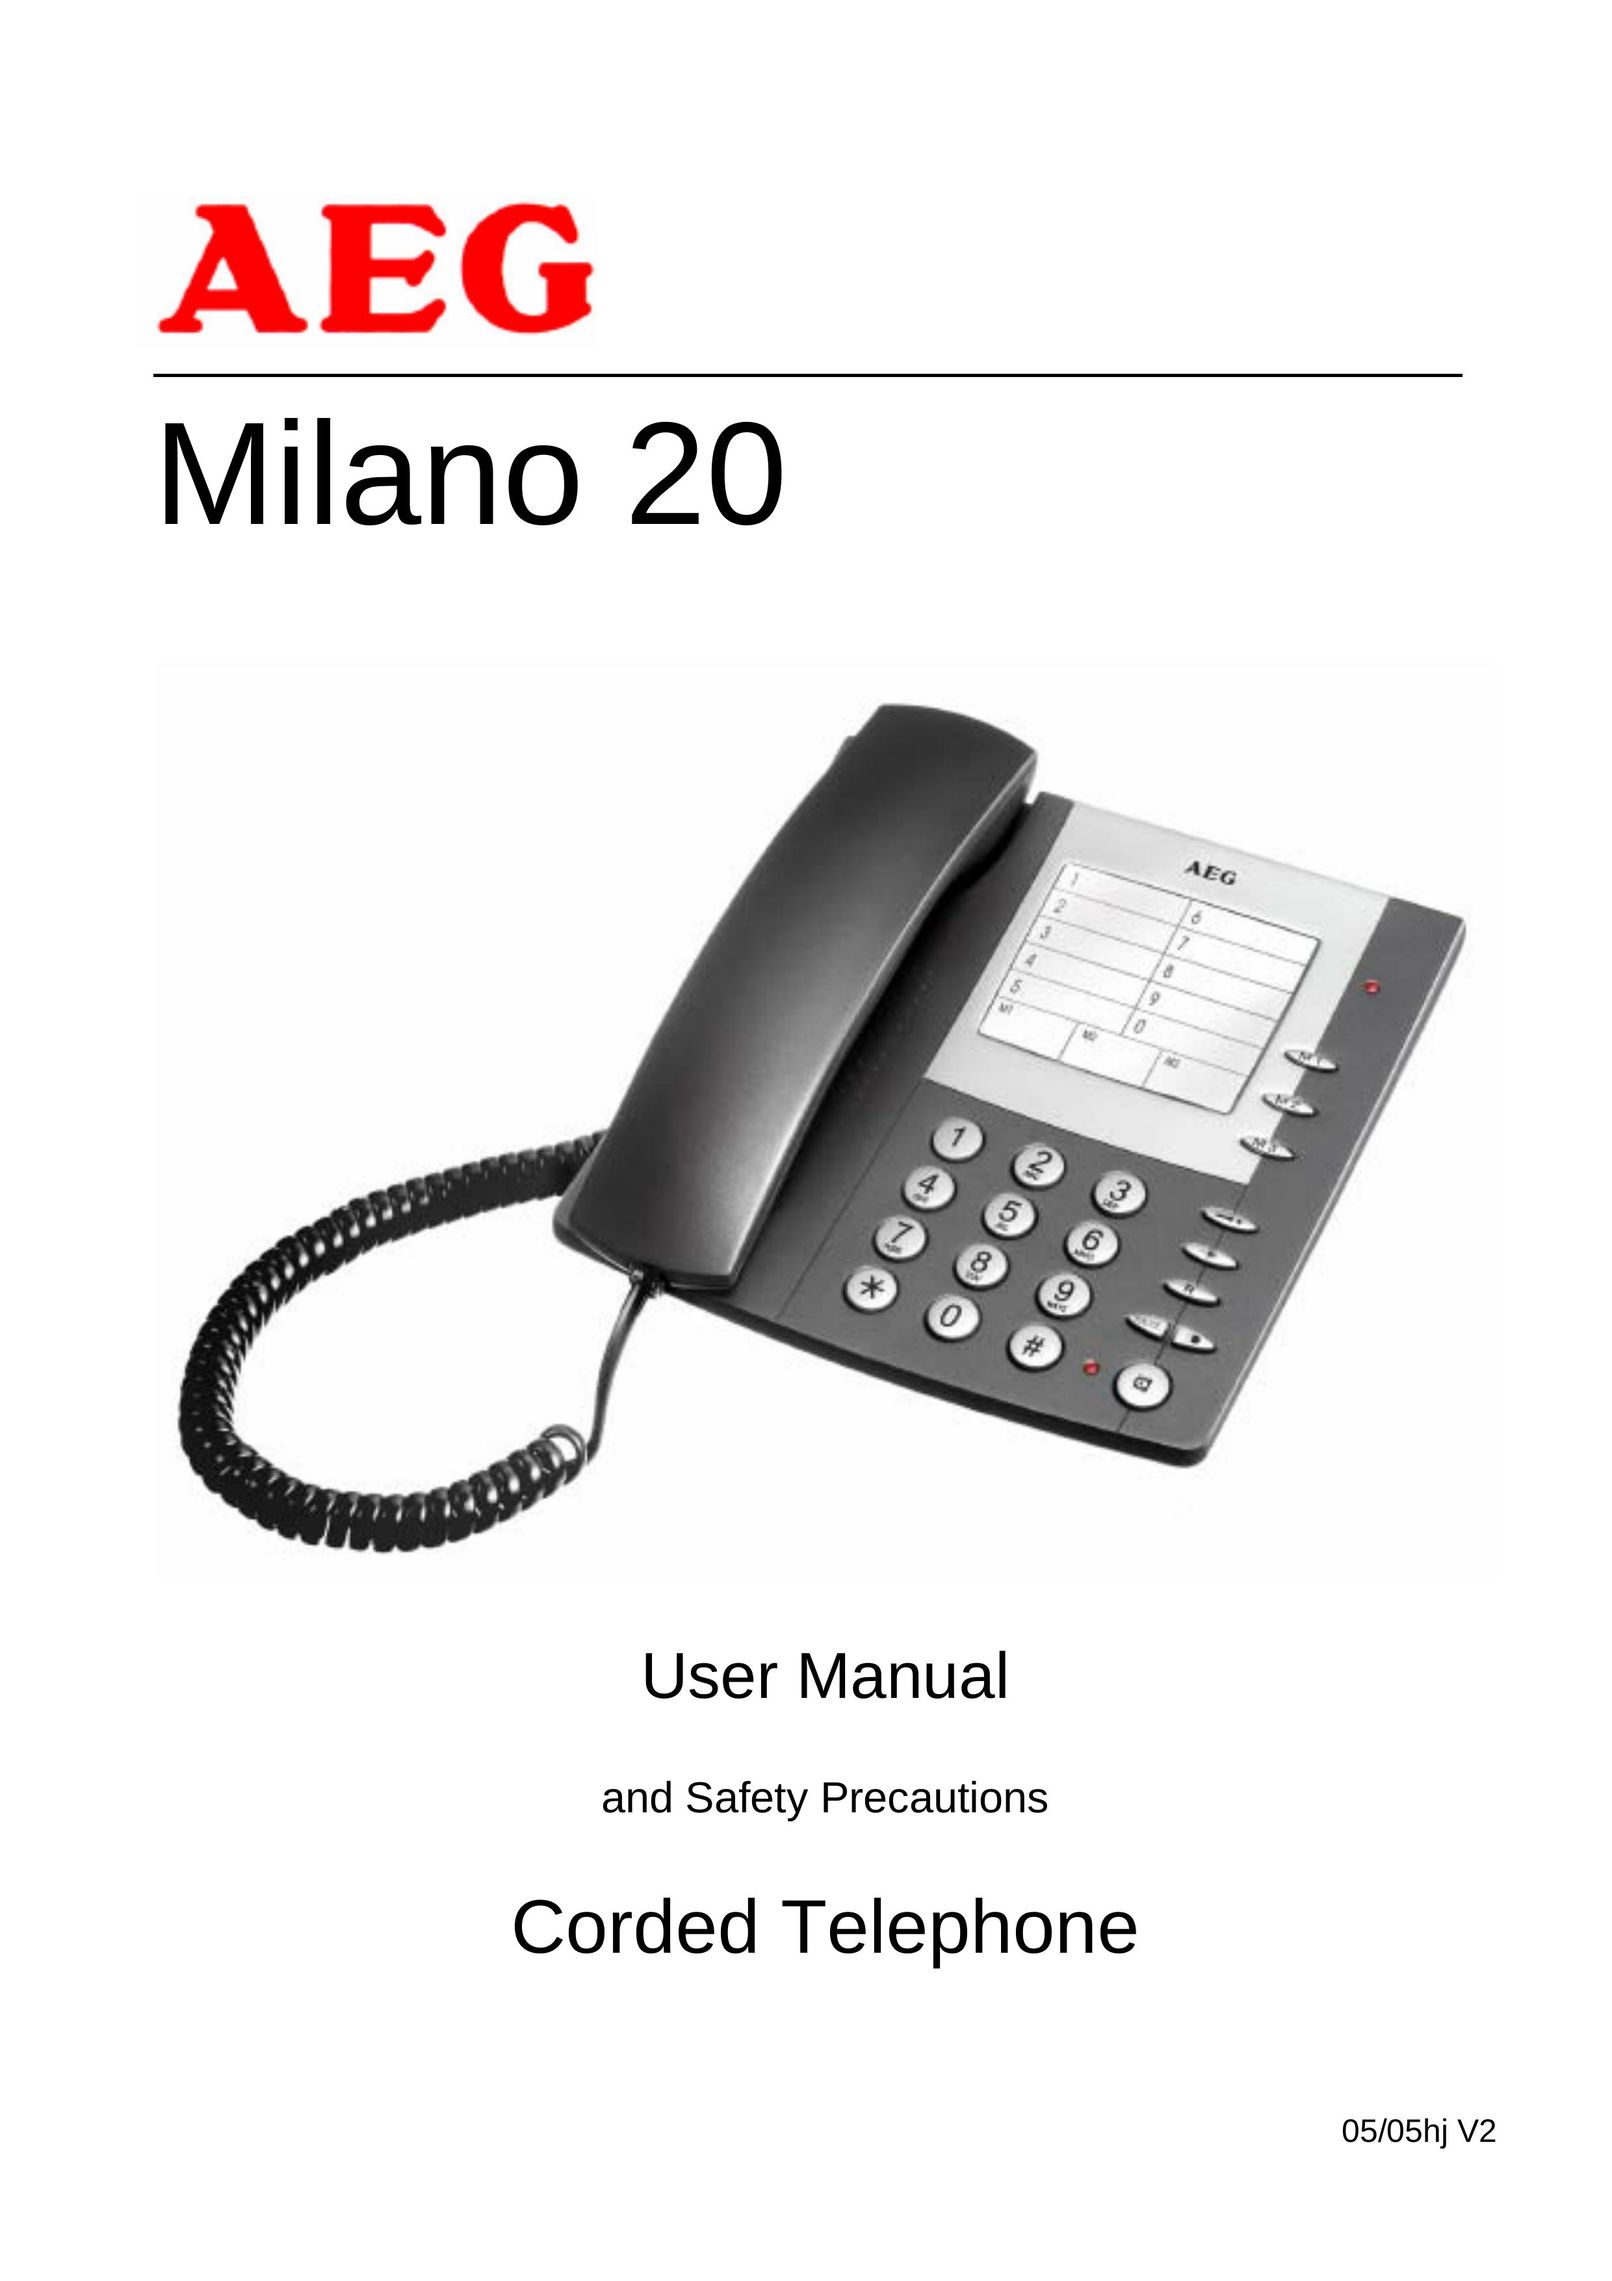 AEG 20 Telephone User Manual